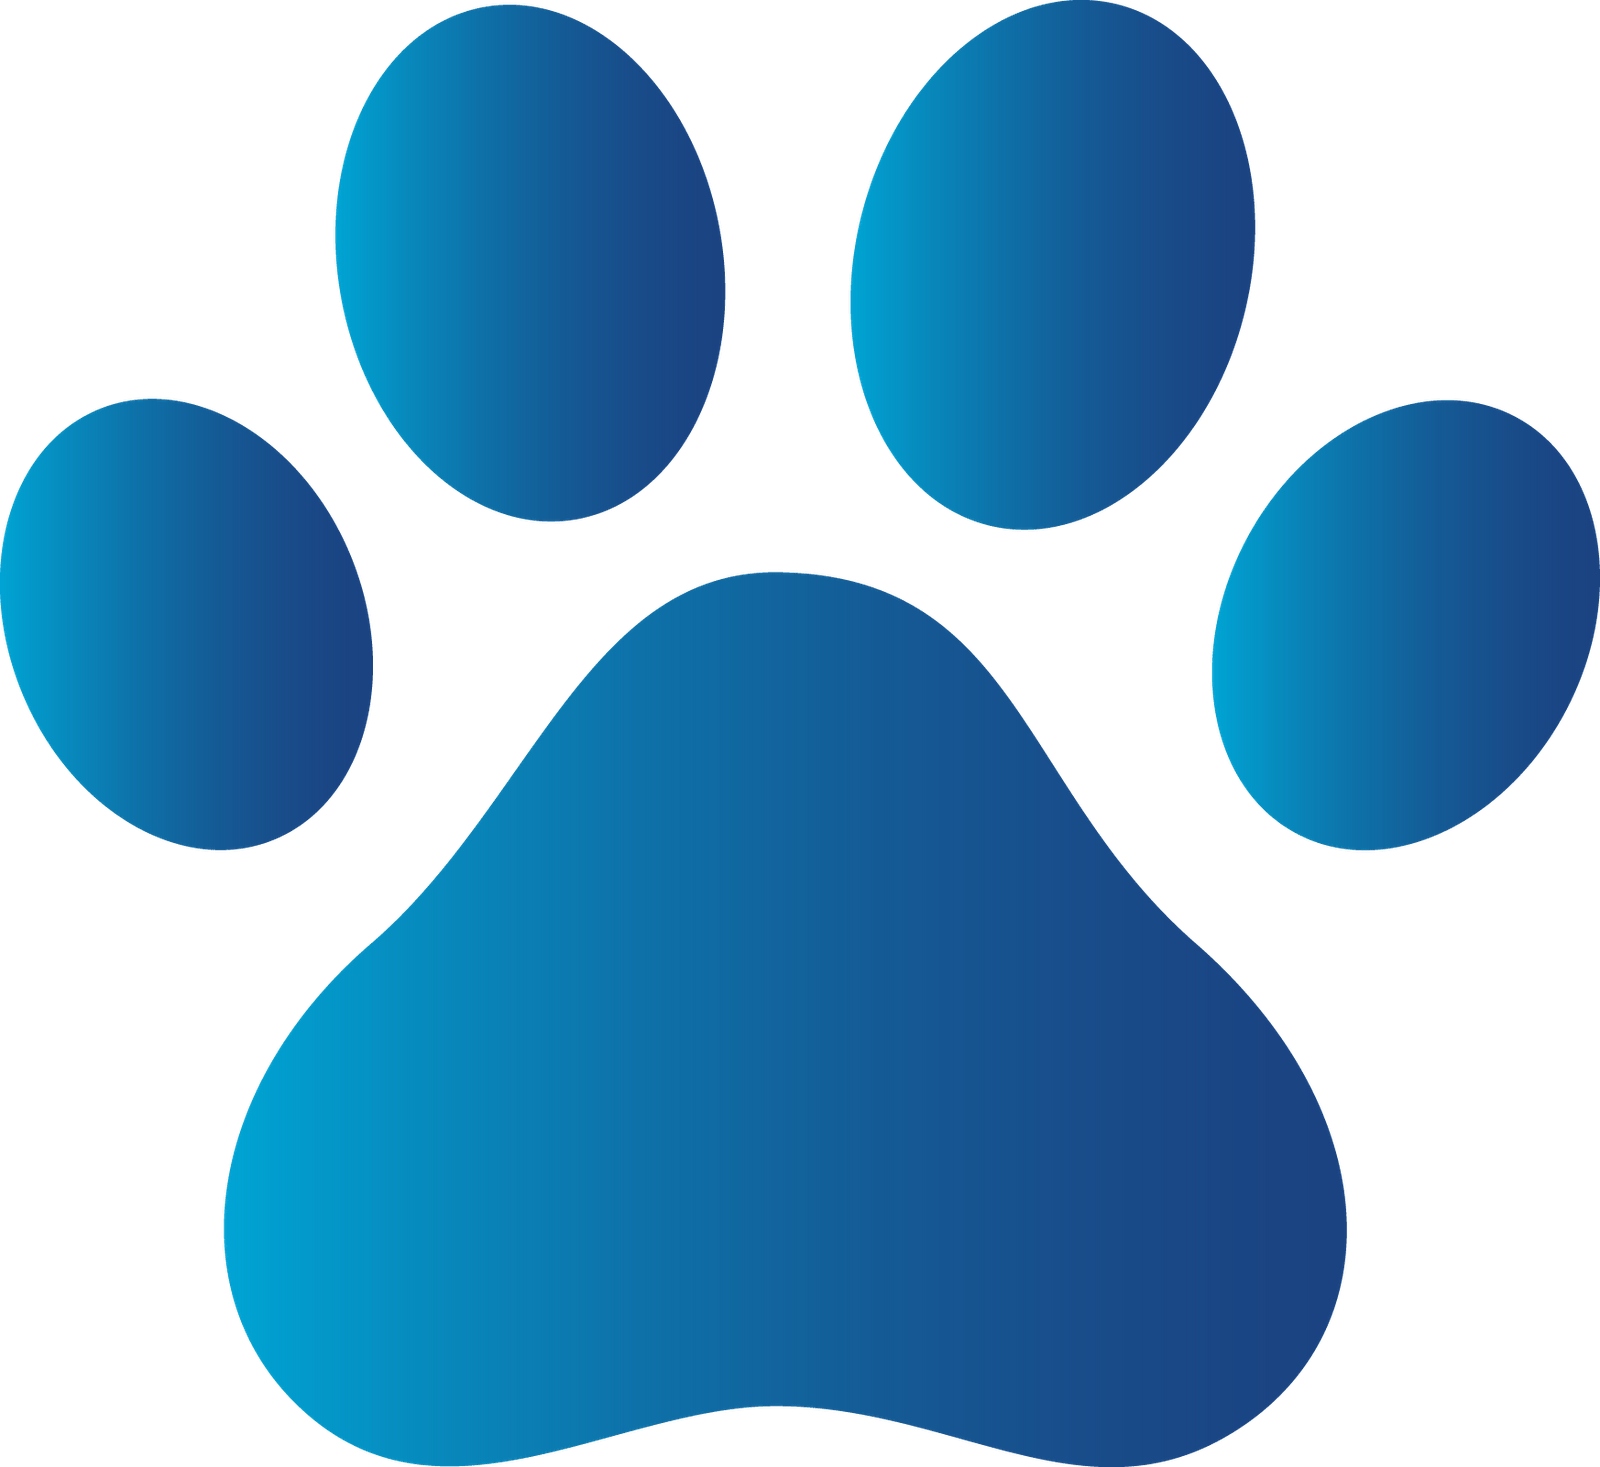 Paw Print Logo - Blue Dog Paw Print Logo free image